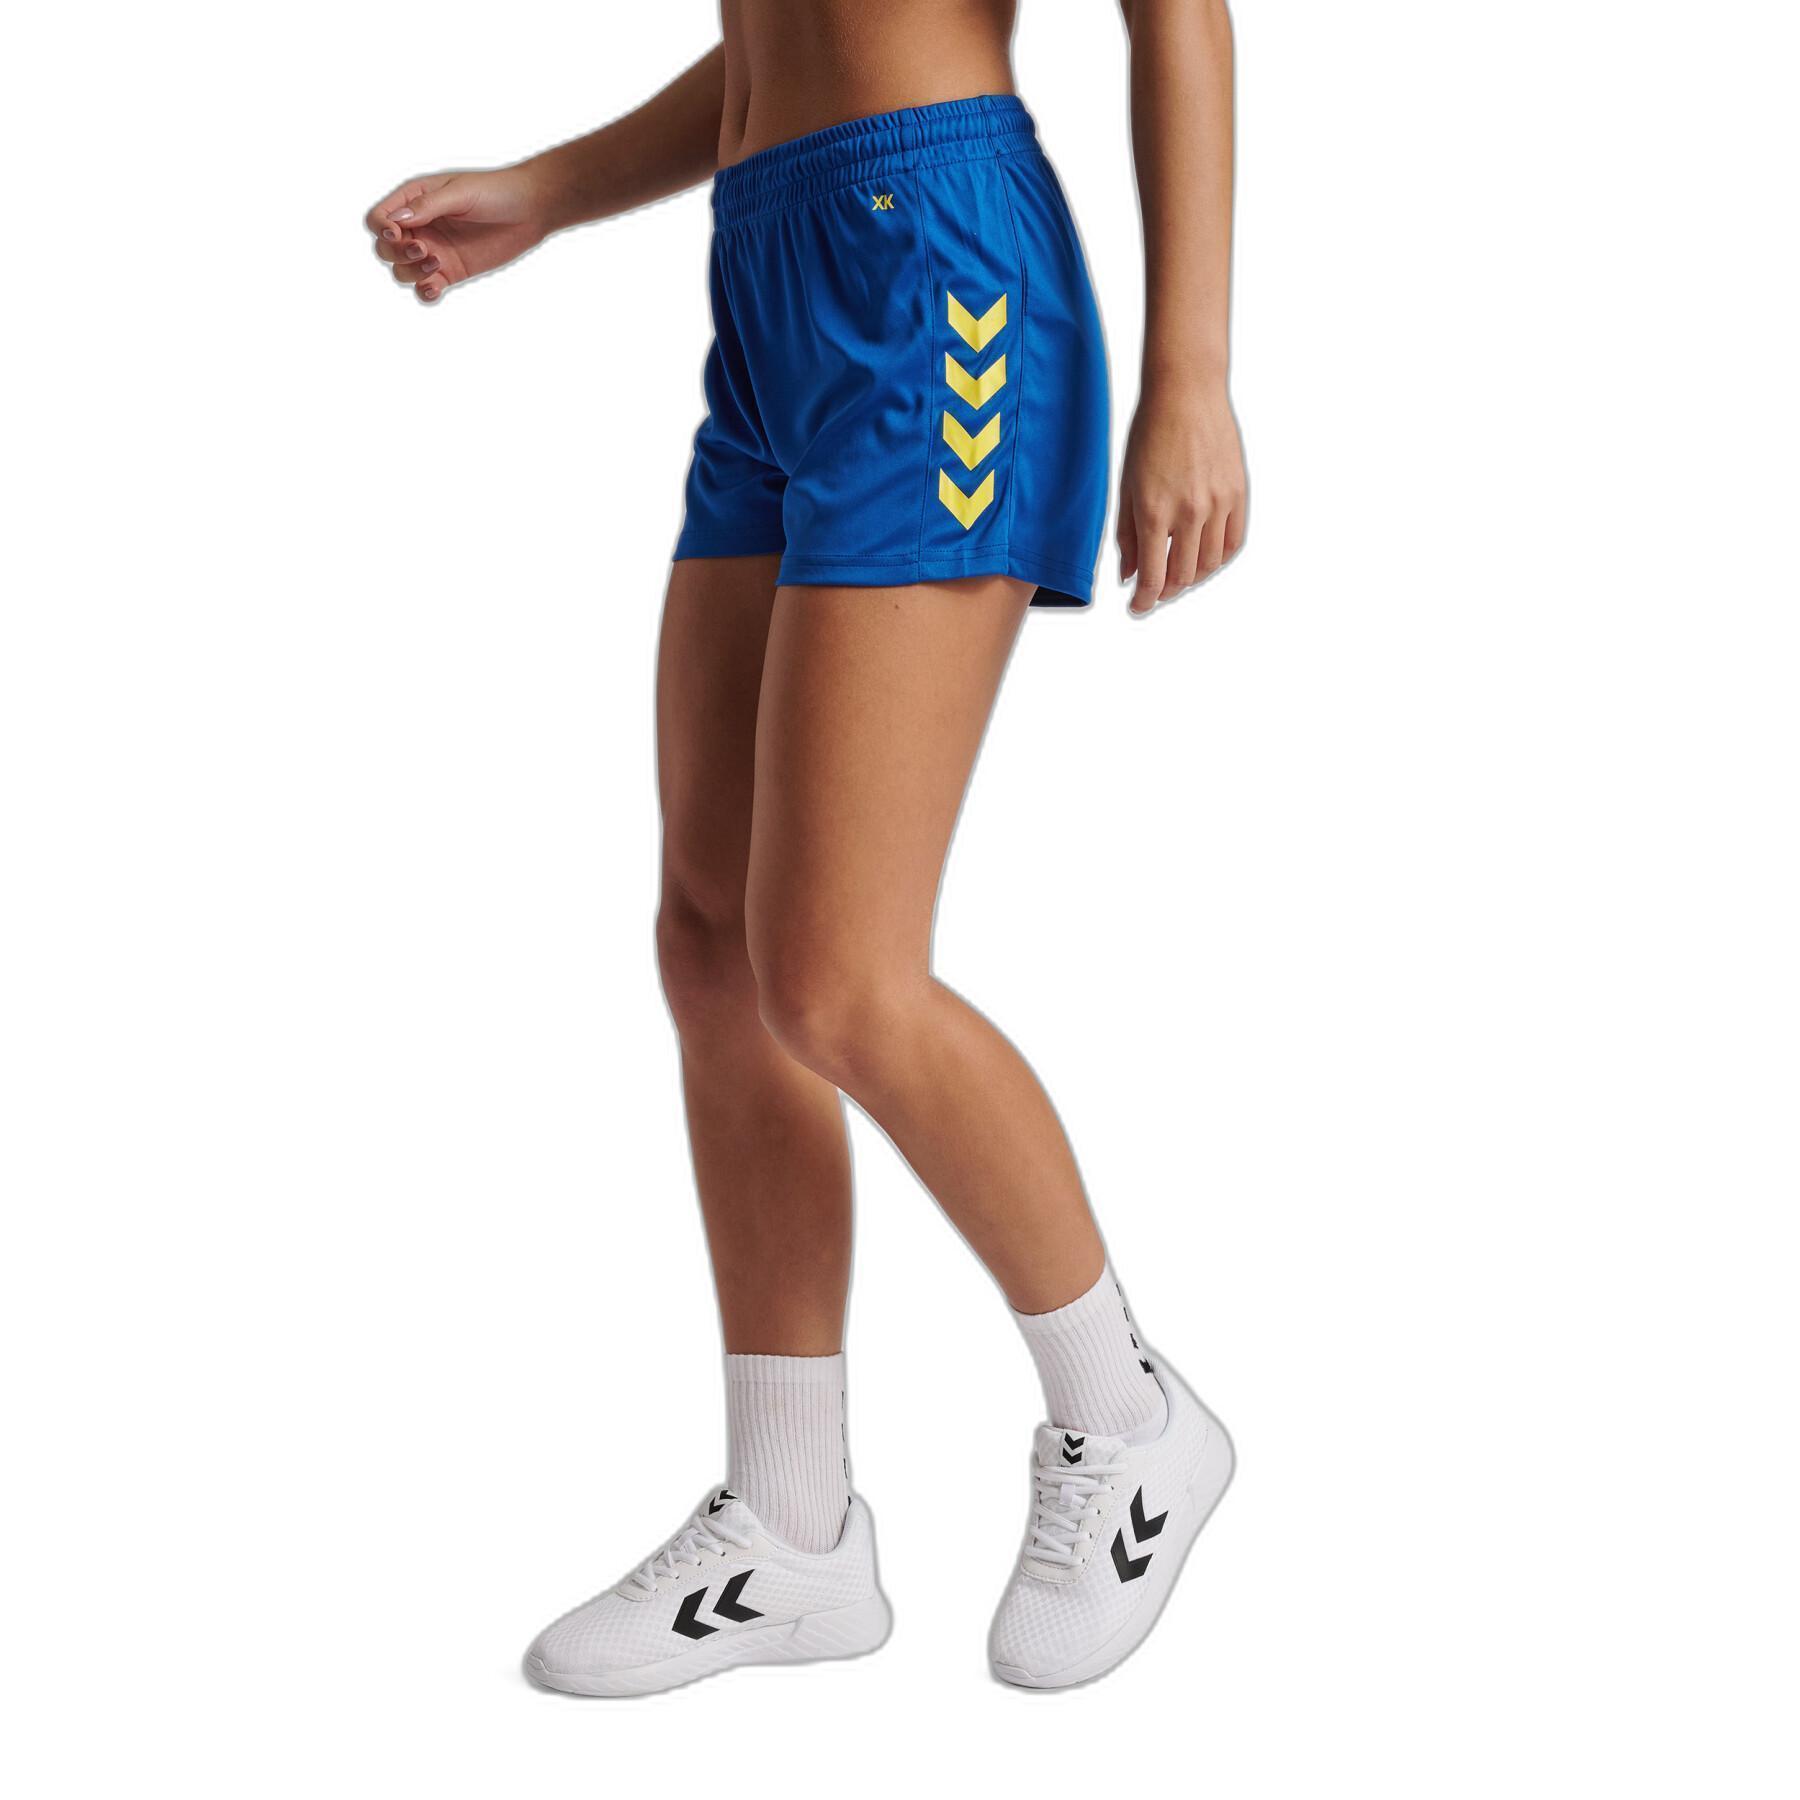 Women's shorts Hummel Core XK - Shorts - Textile - Handball wear